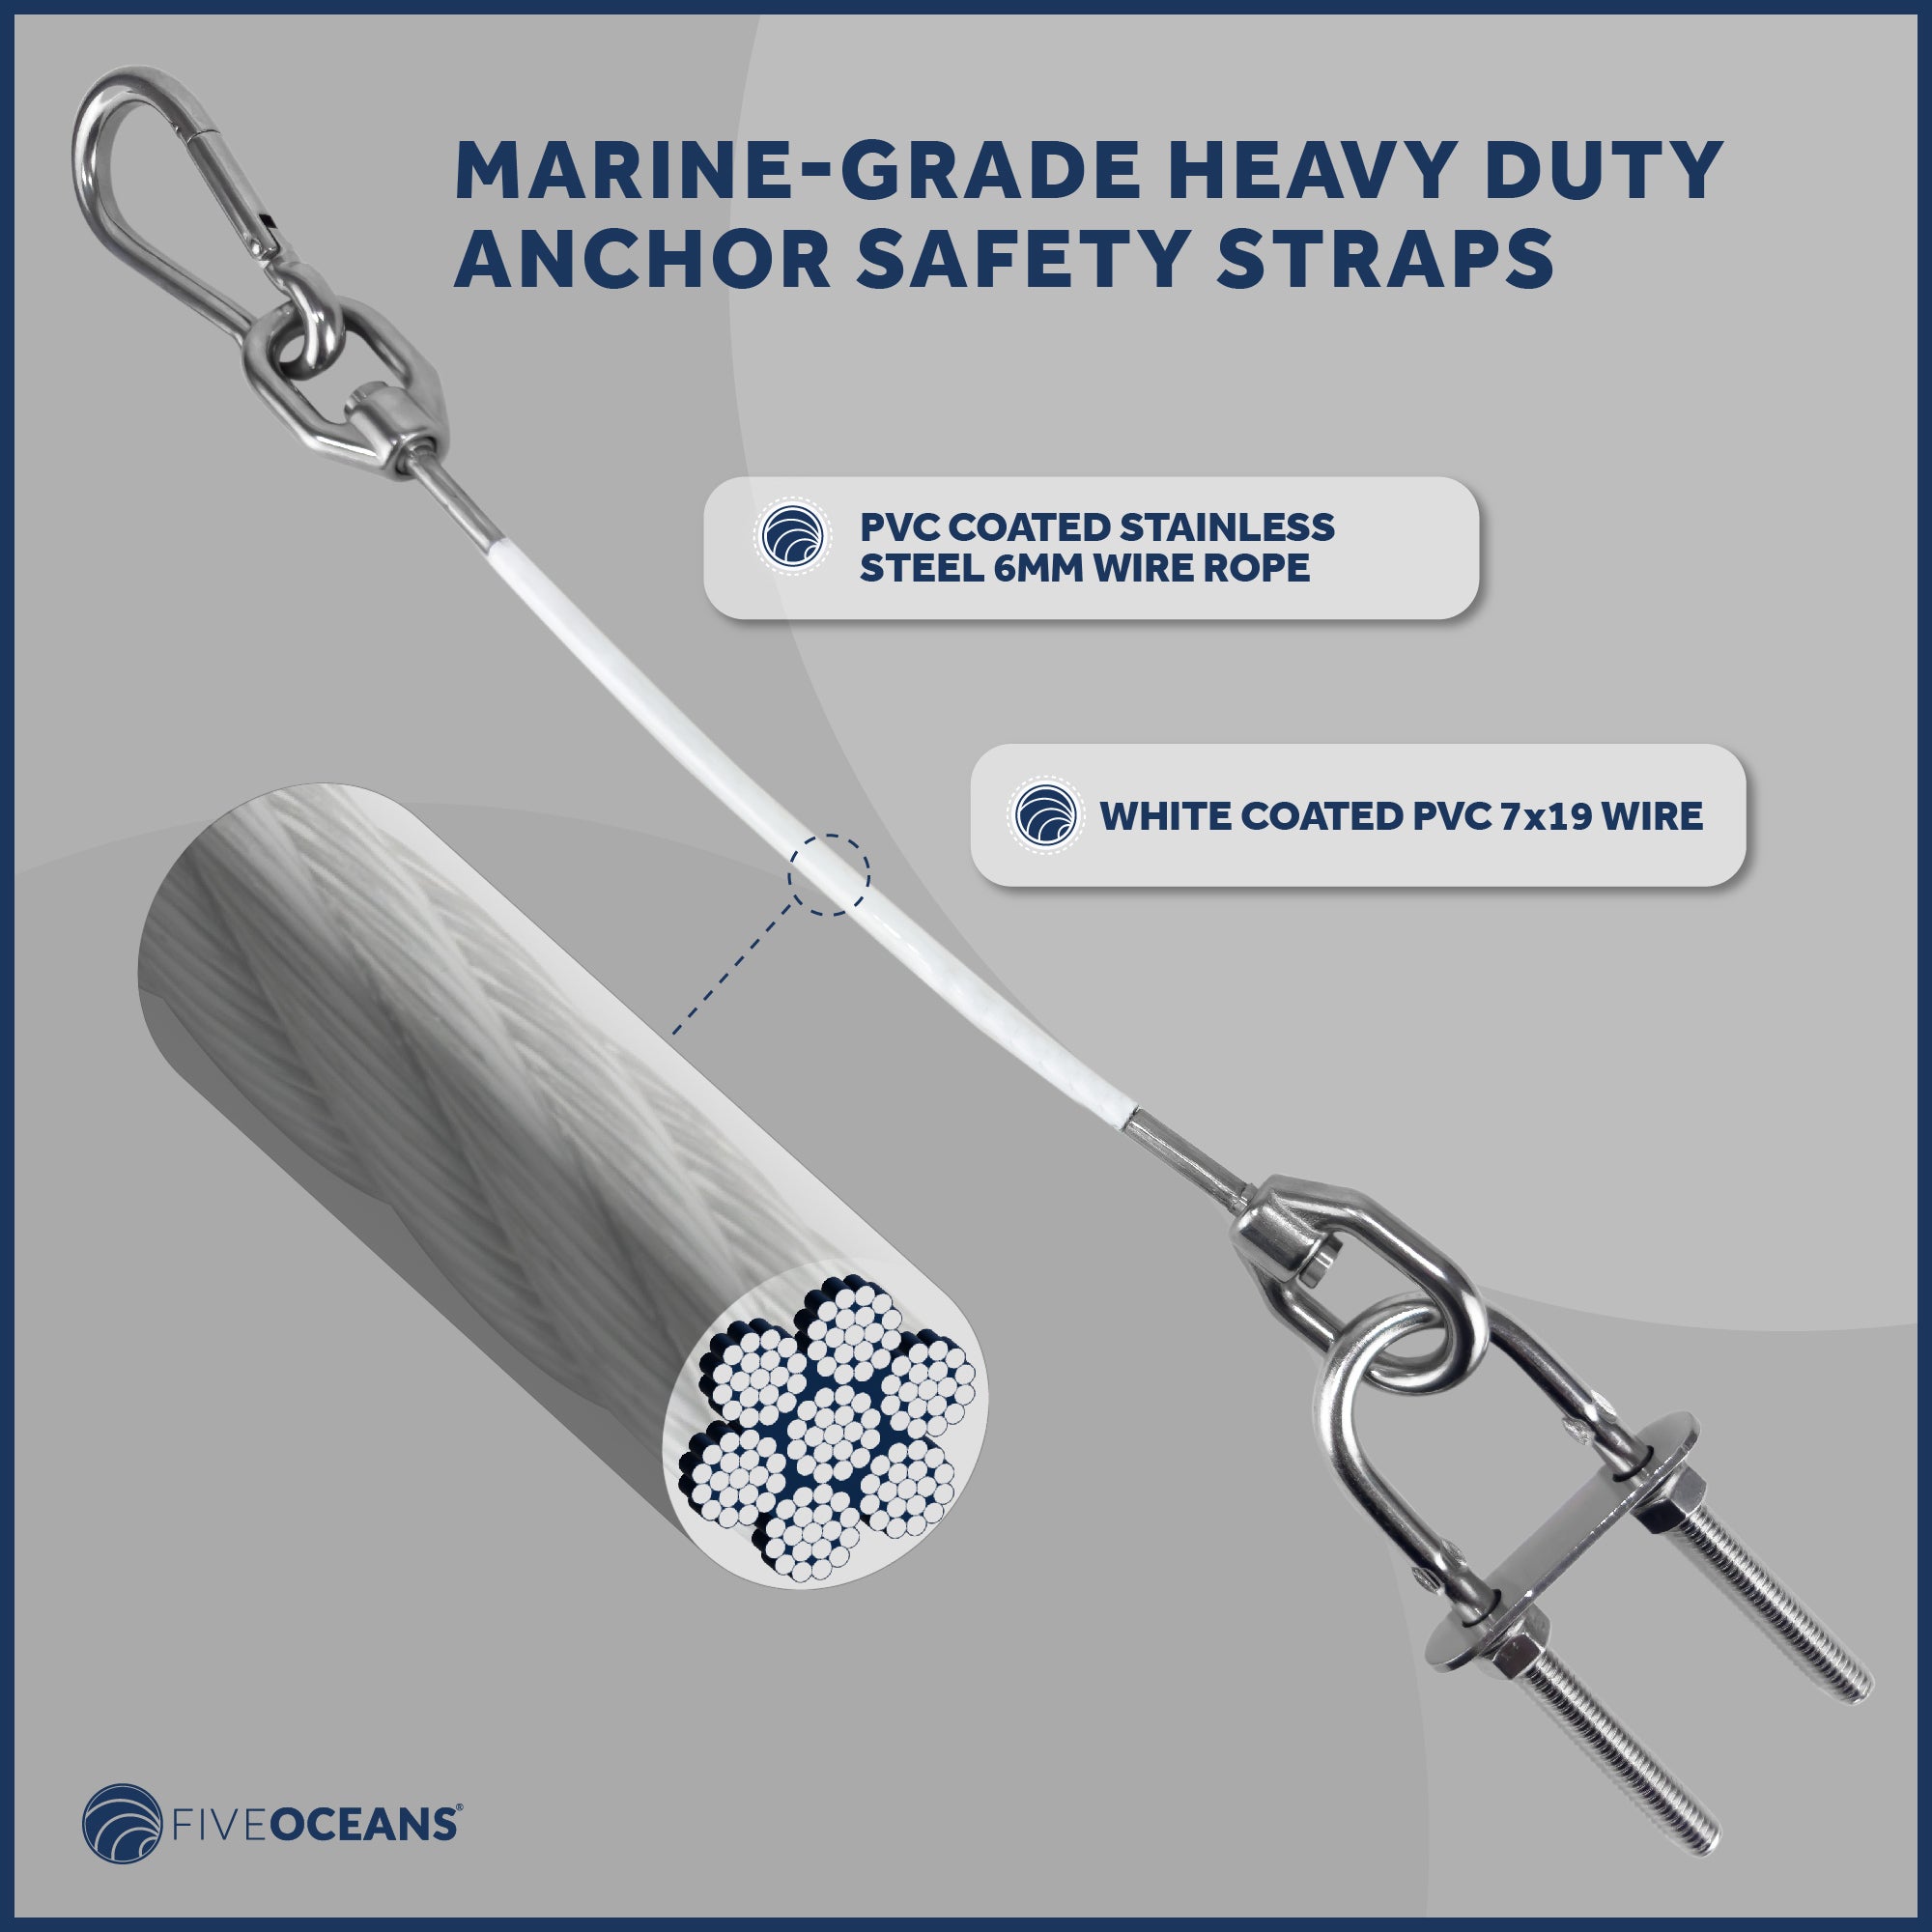 Snap Hook Heavy Duty Carabiner — Slide Anchor